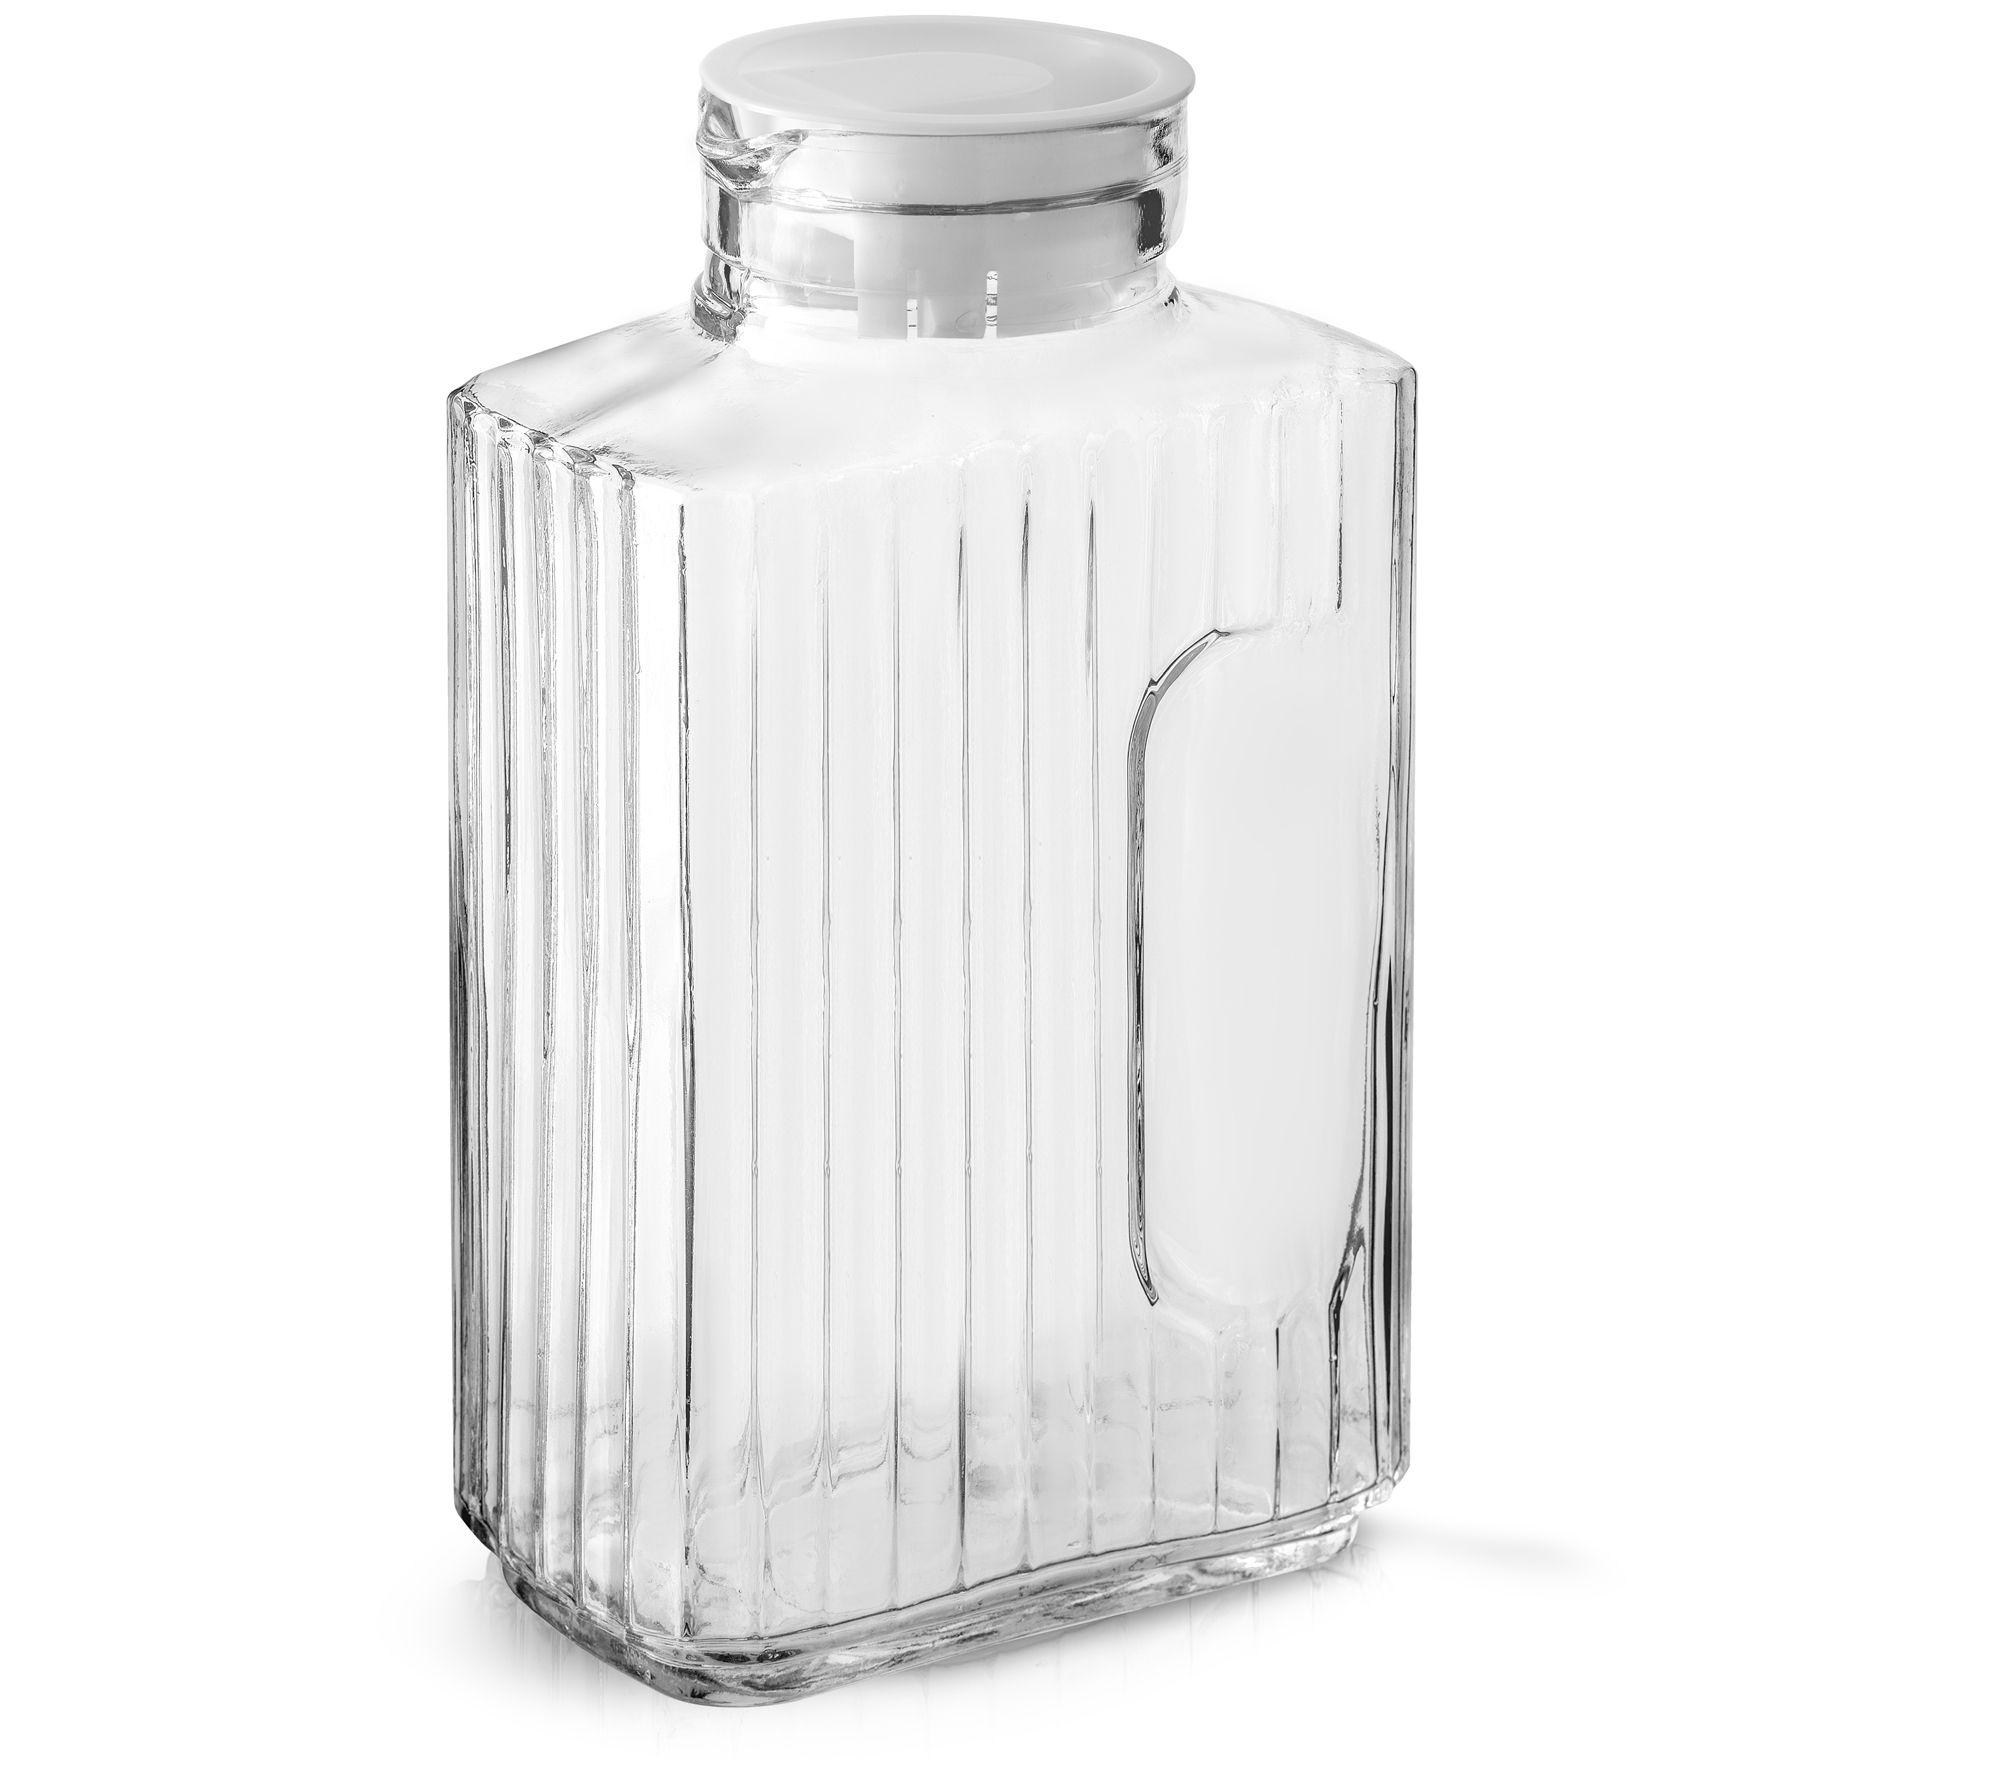 Joyjolt Hali Glass Carafe Bottle Water Or Juice Pitcher With 6